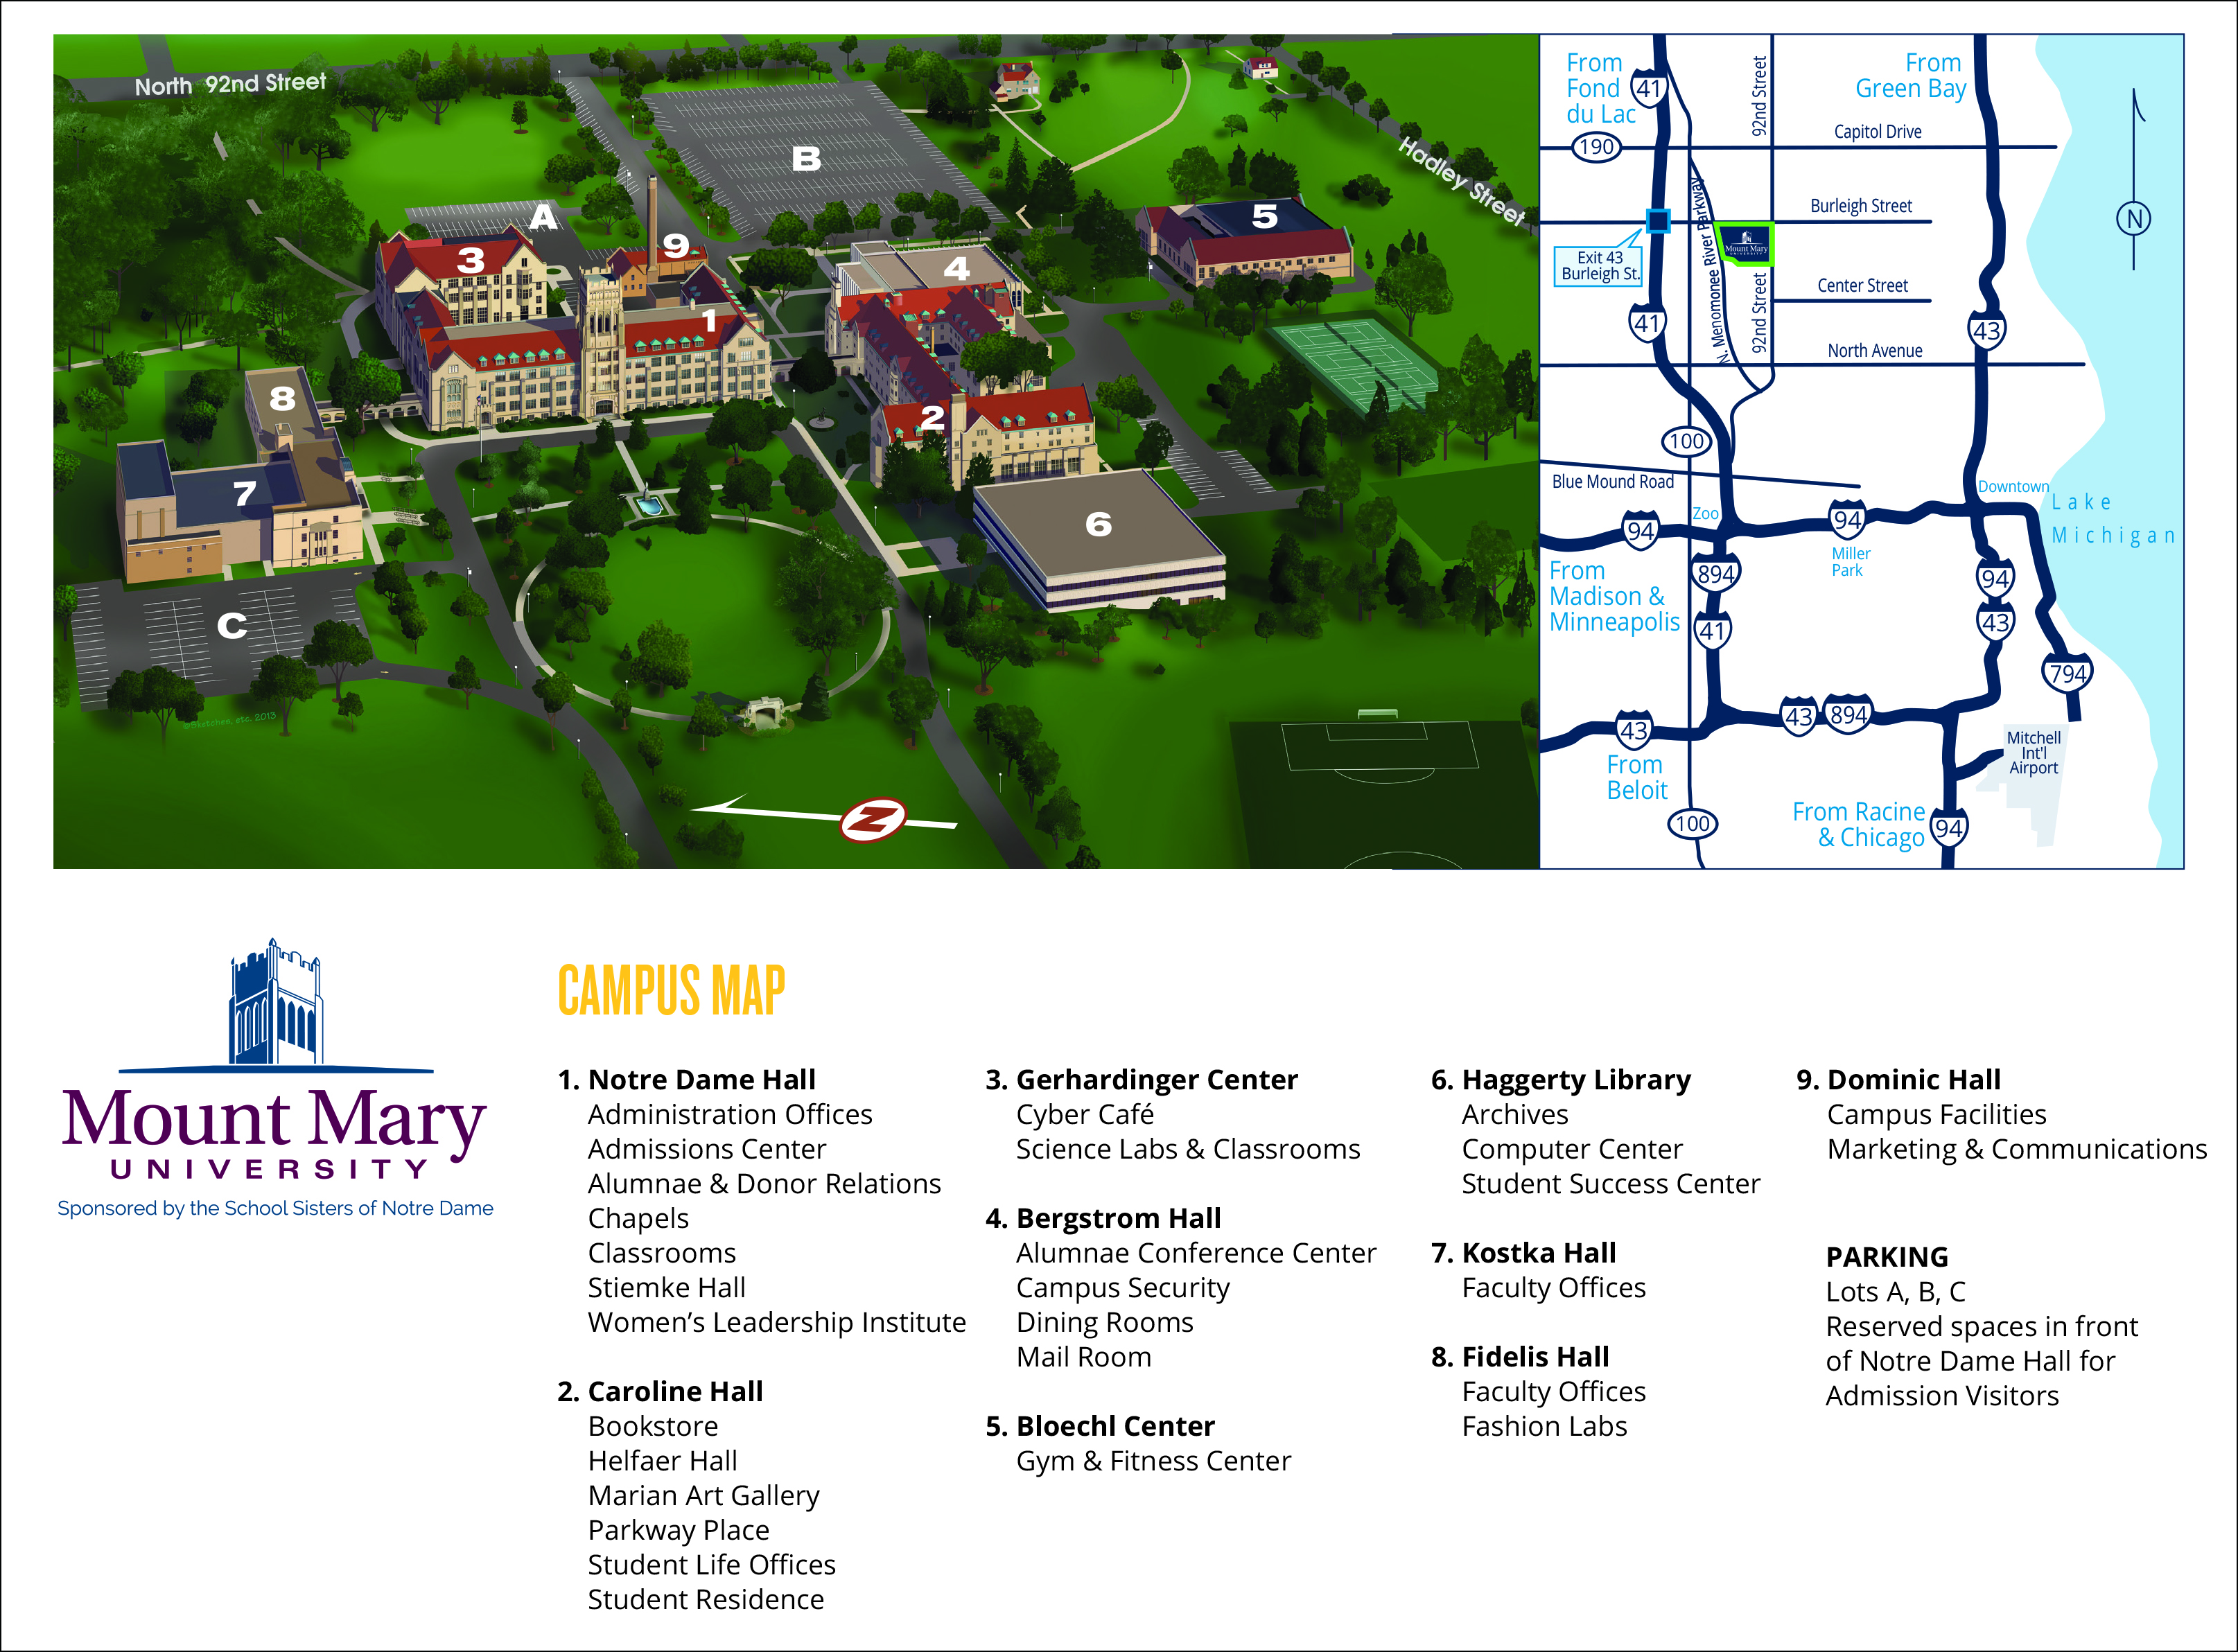 mmu_campus-map_2020.jpg